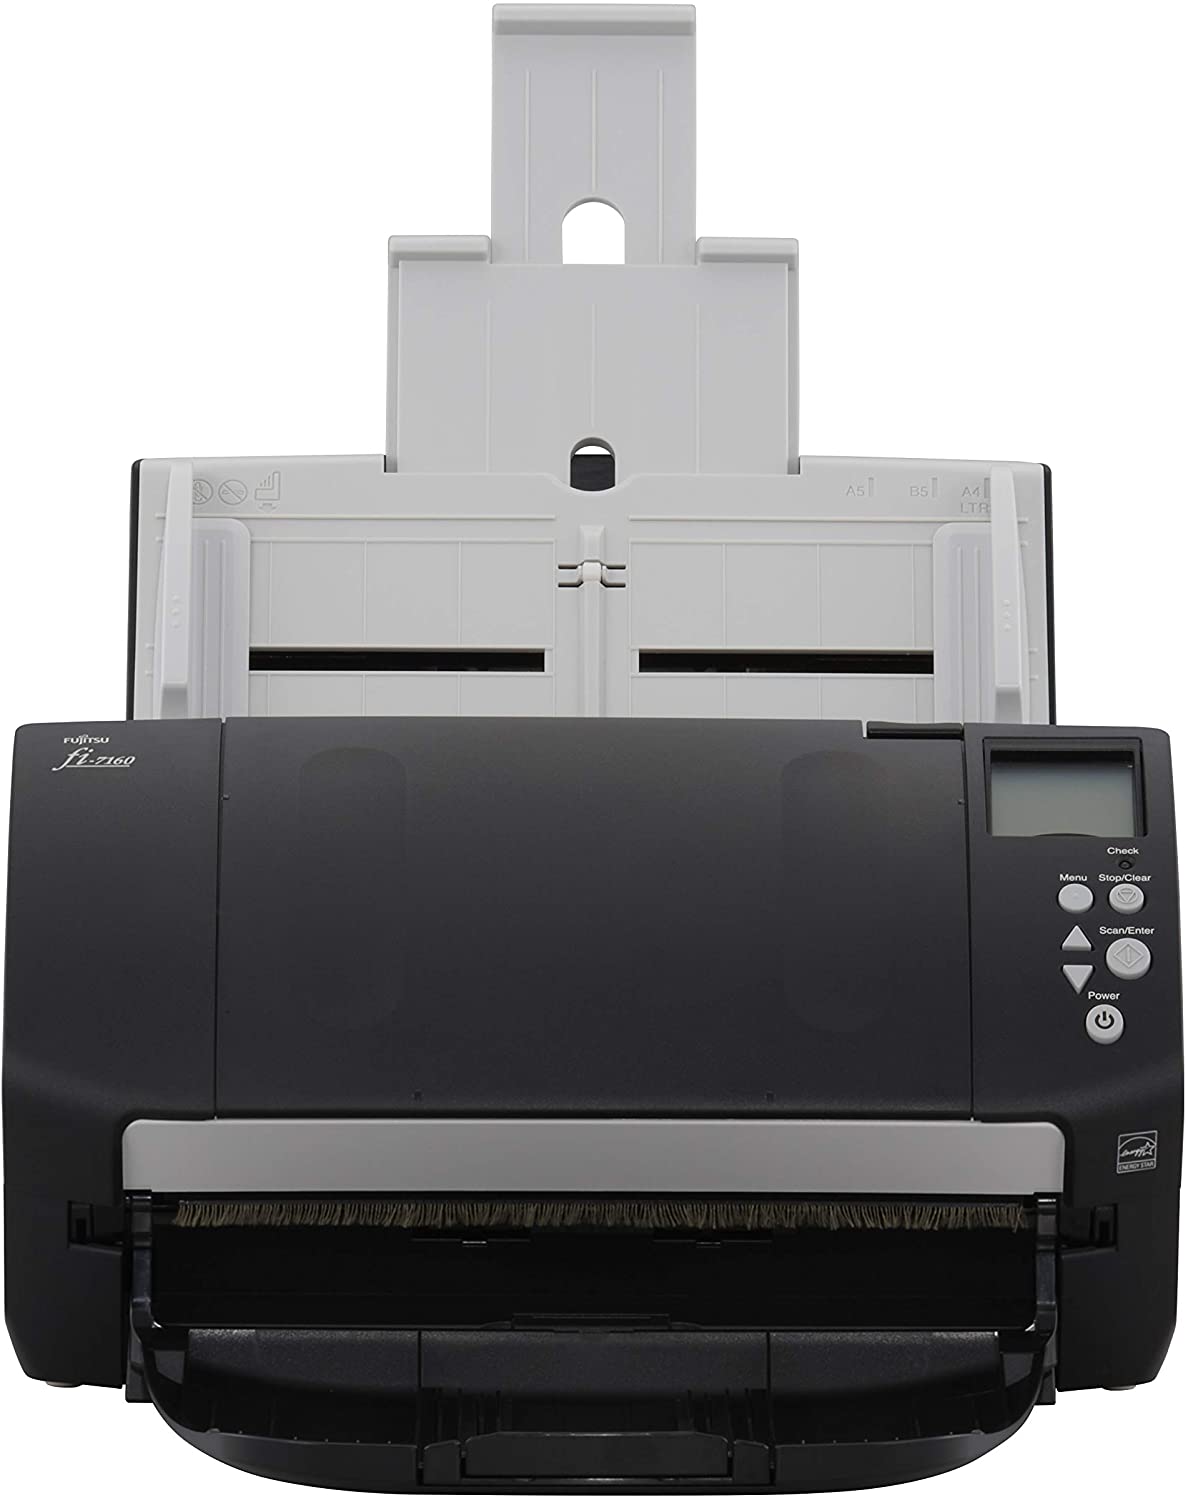 fujitsu fi 7160 scanner